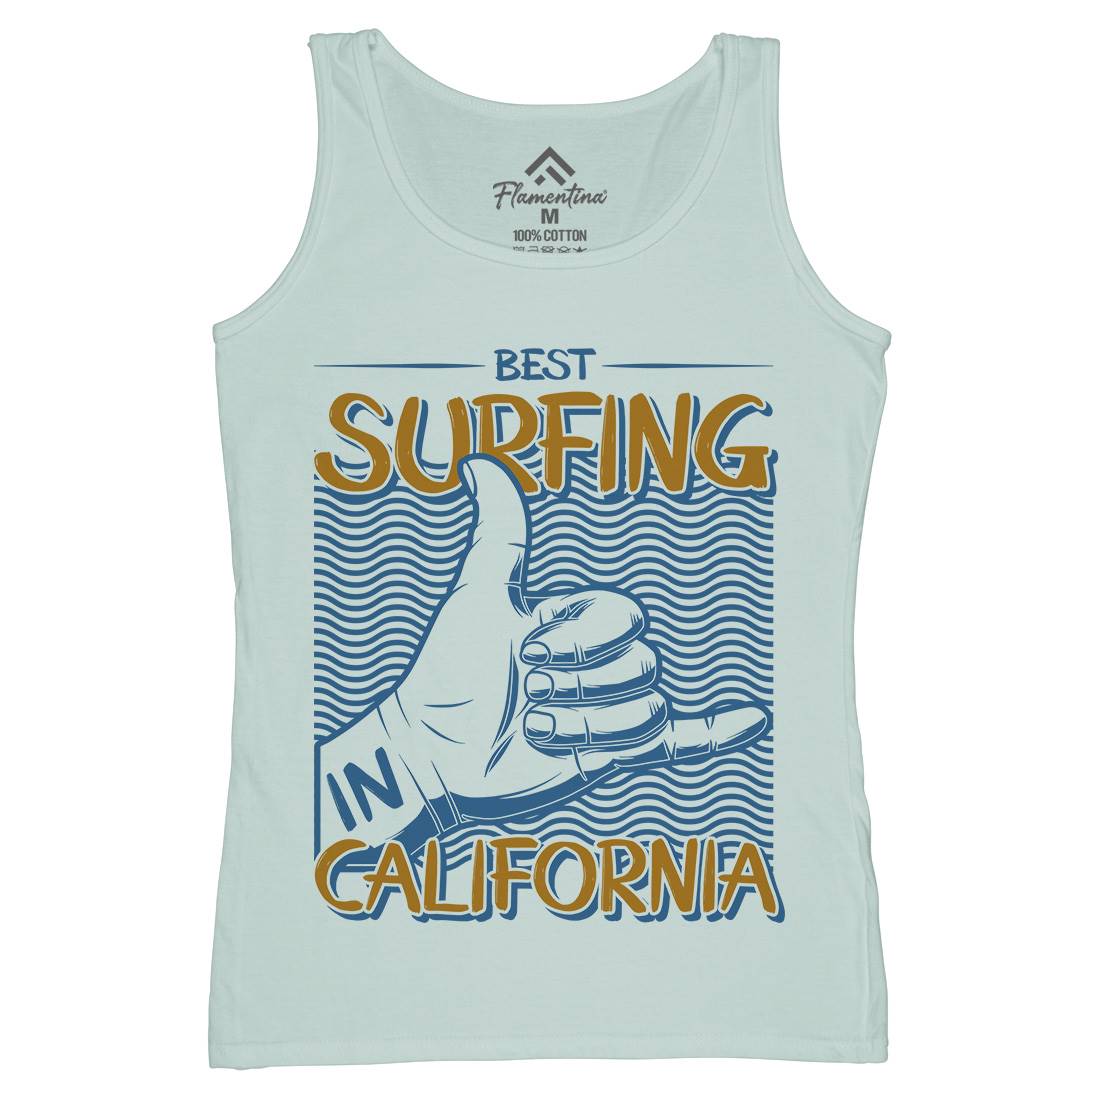 Best Surfing Womens Organic Tank Top Vest Surf D908